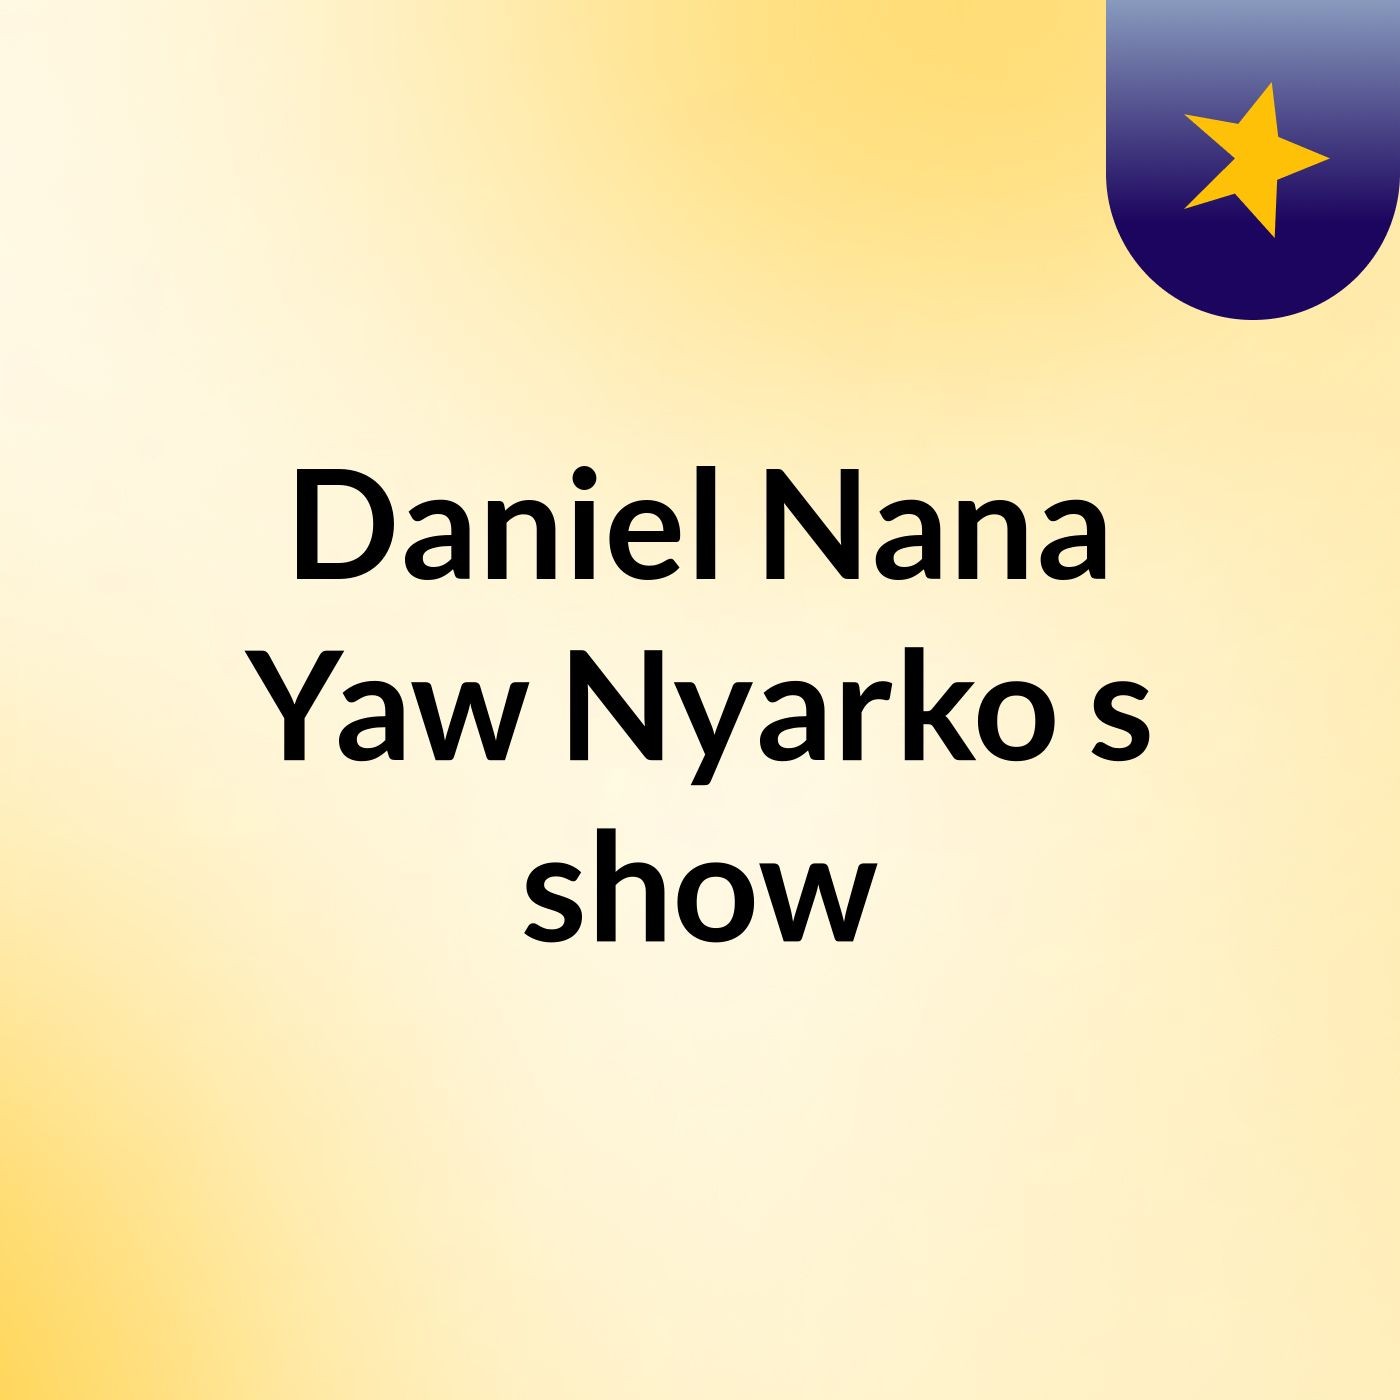 Episode 2 - Daniel Nana Yaw Nyarko's show